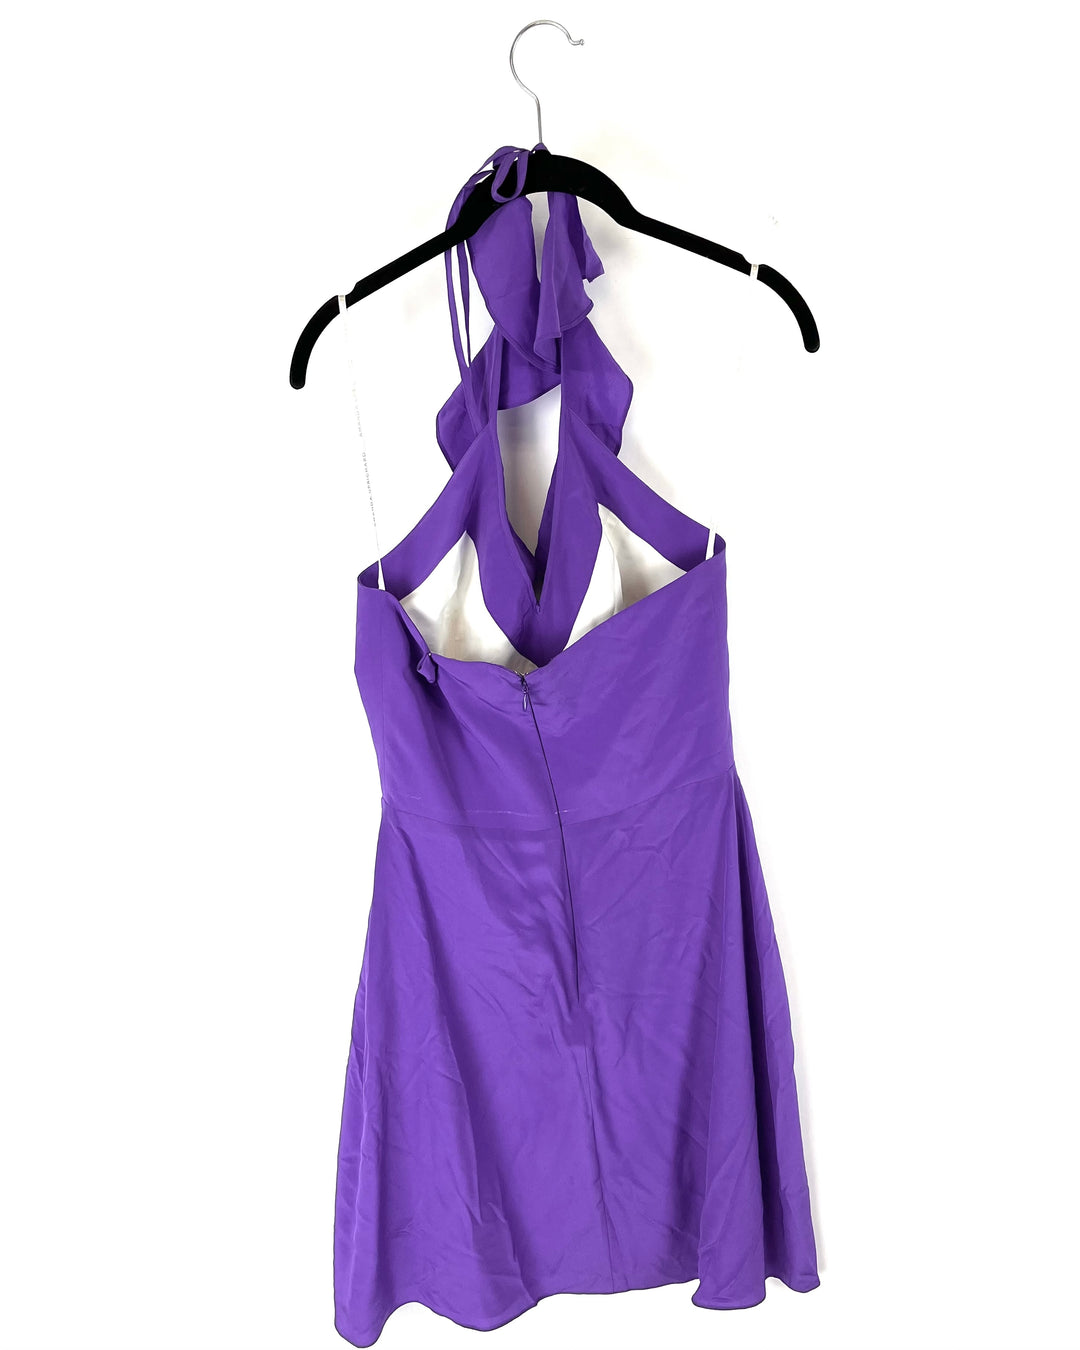 Purple Ruffled Halter Top Dress - Size 4-6